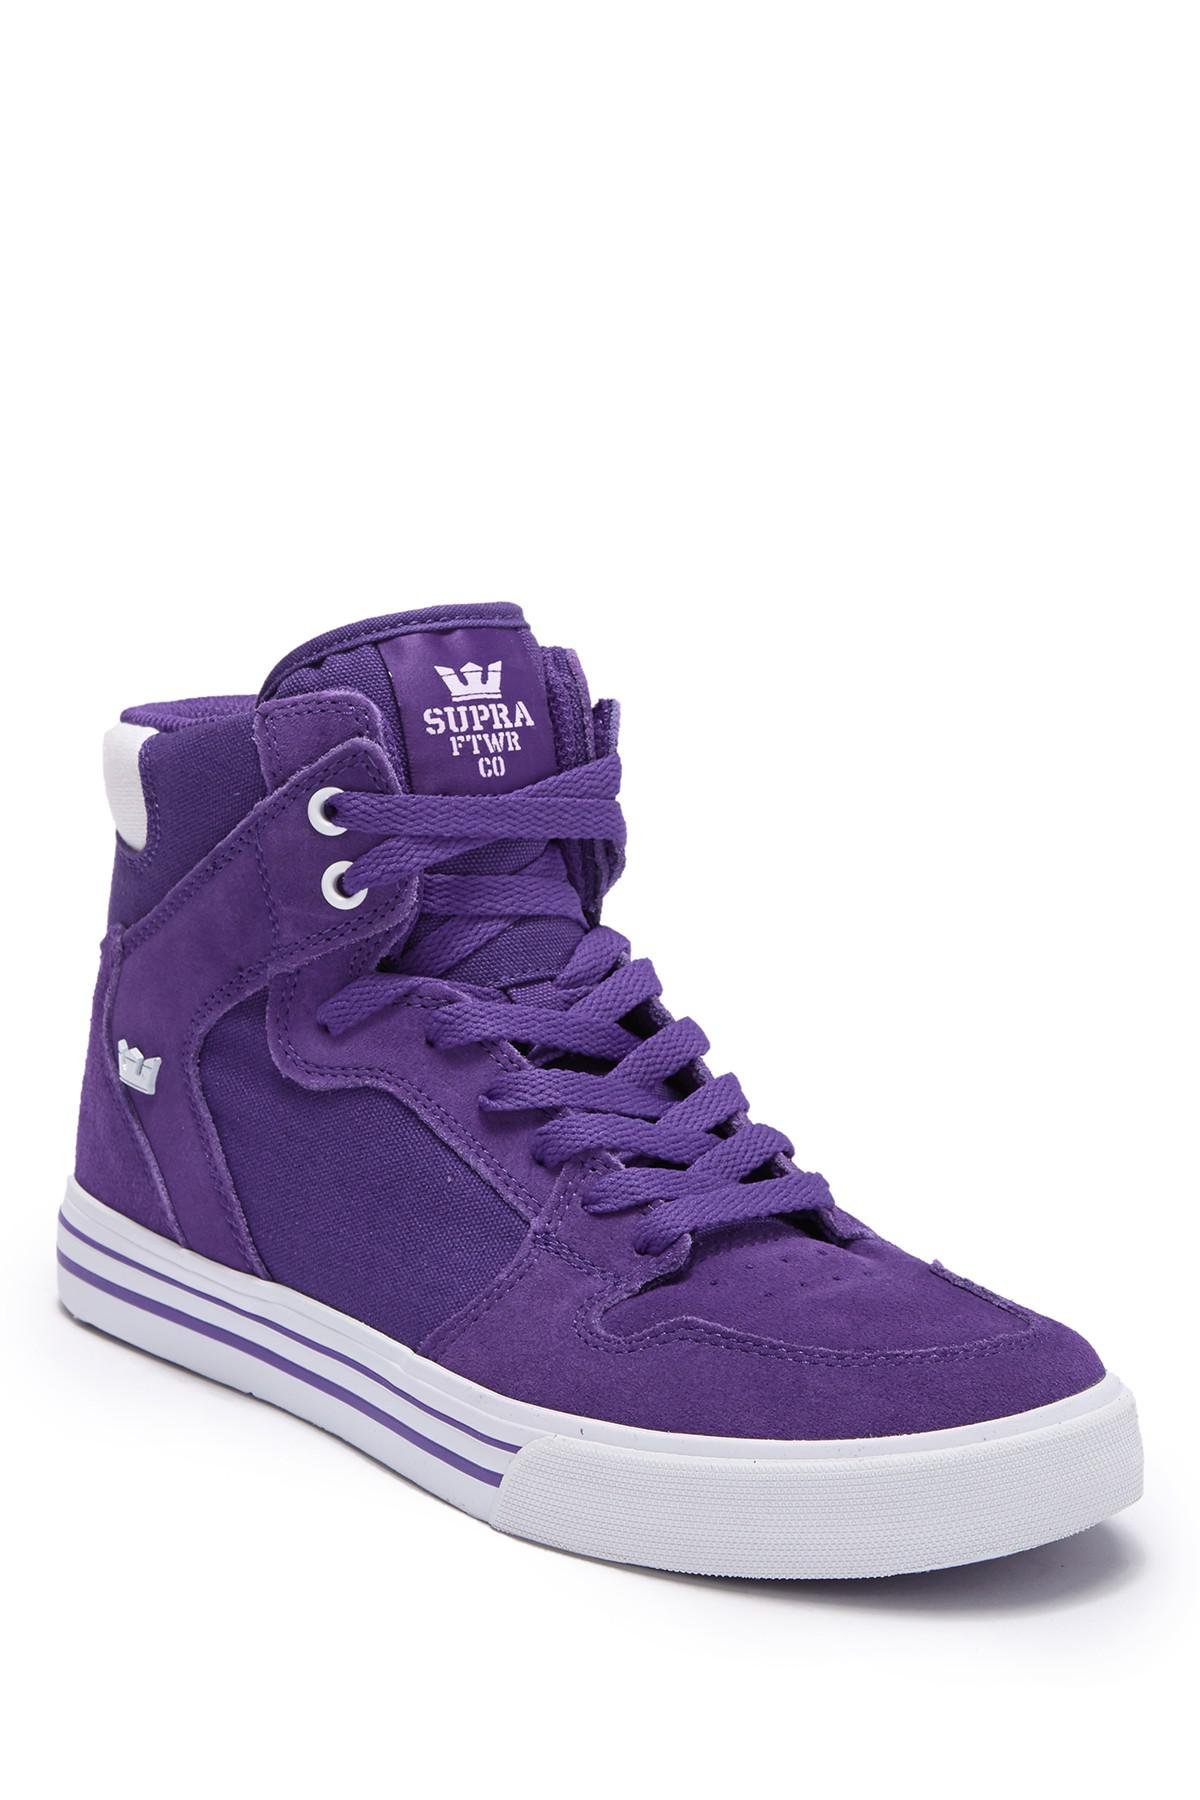 Supra Vaider Suede High Top Sneaker in Purple-White (Purple) for Men - Lyst